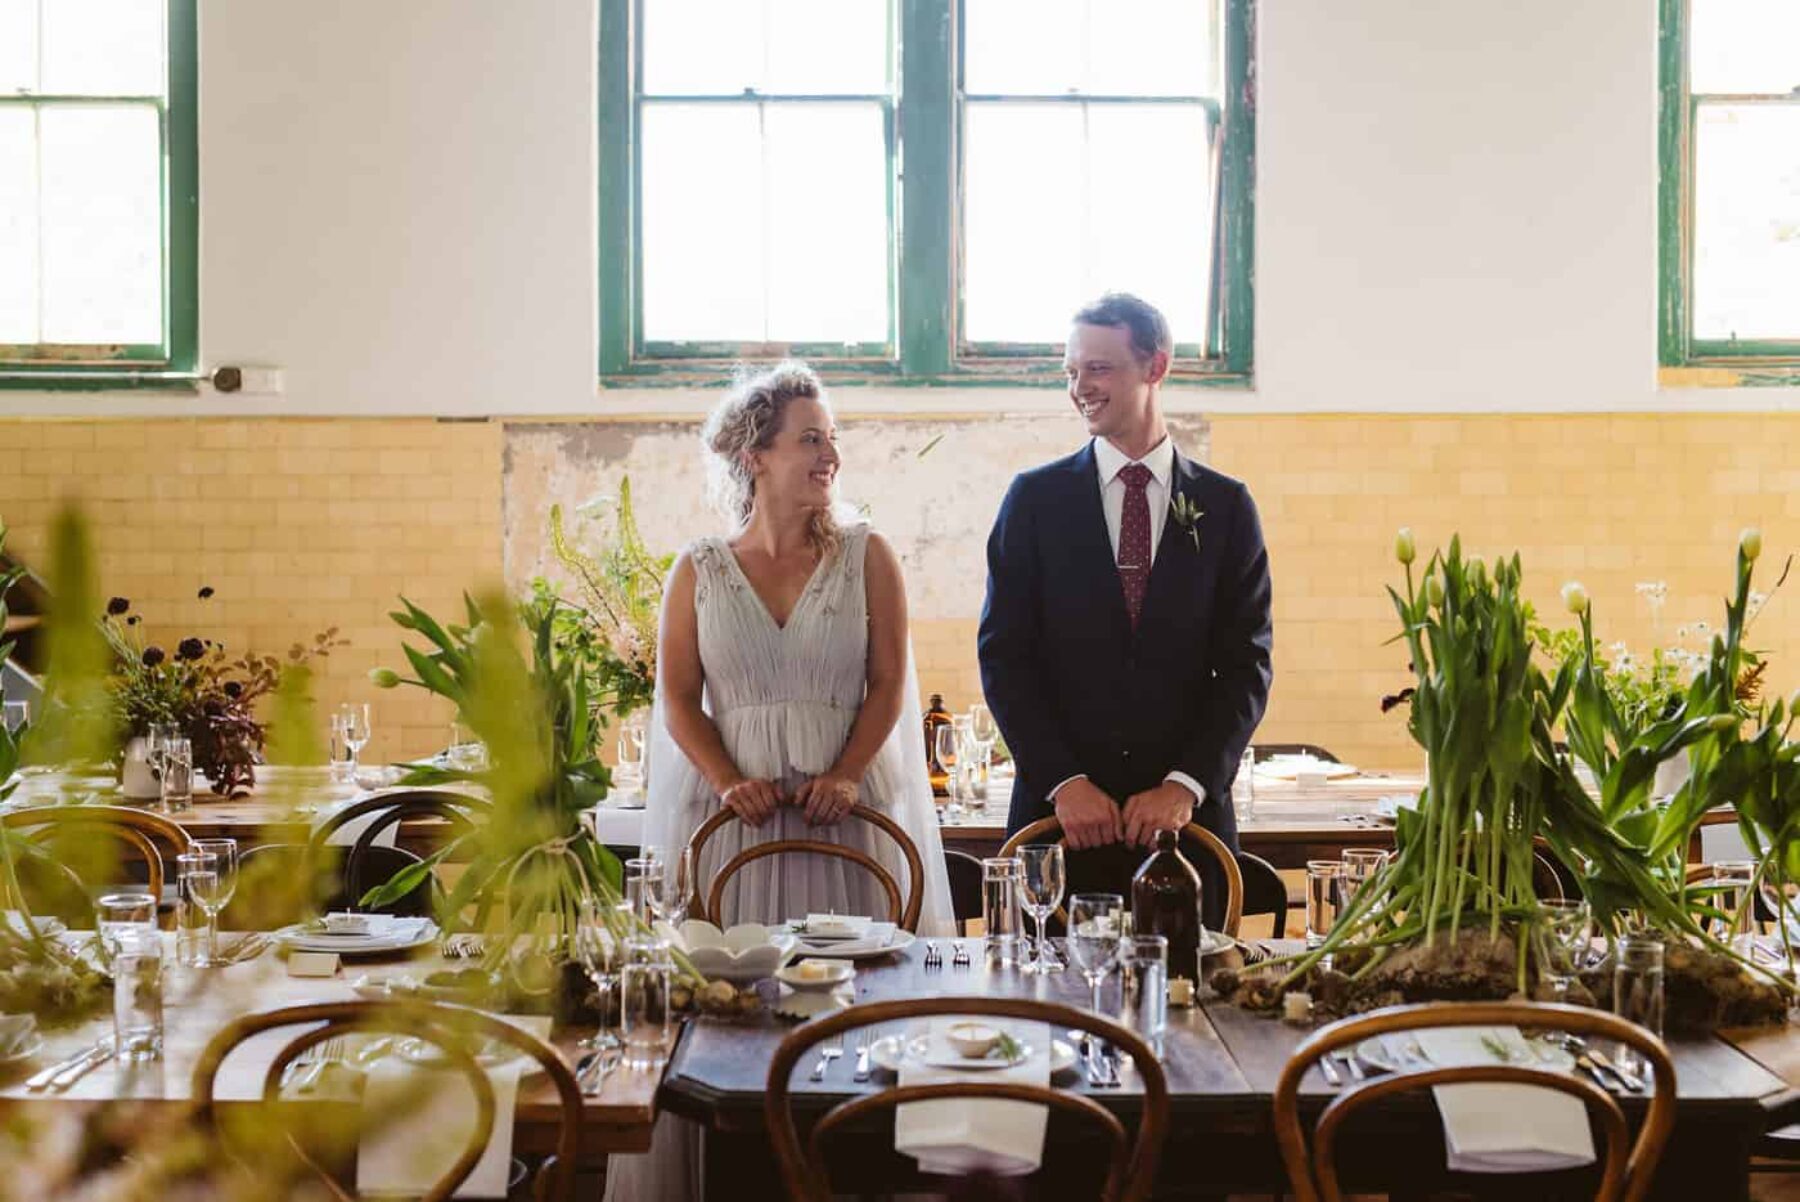 Grace & John’s organic wedding at Butterland, VIC - photography by Motta Weddings